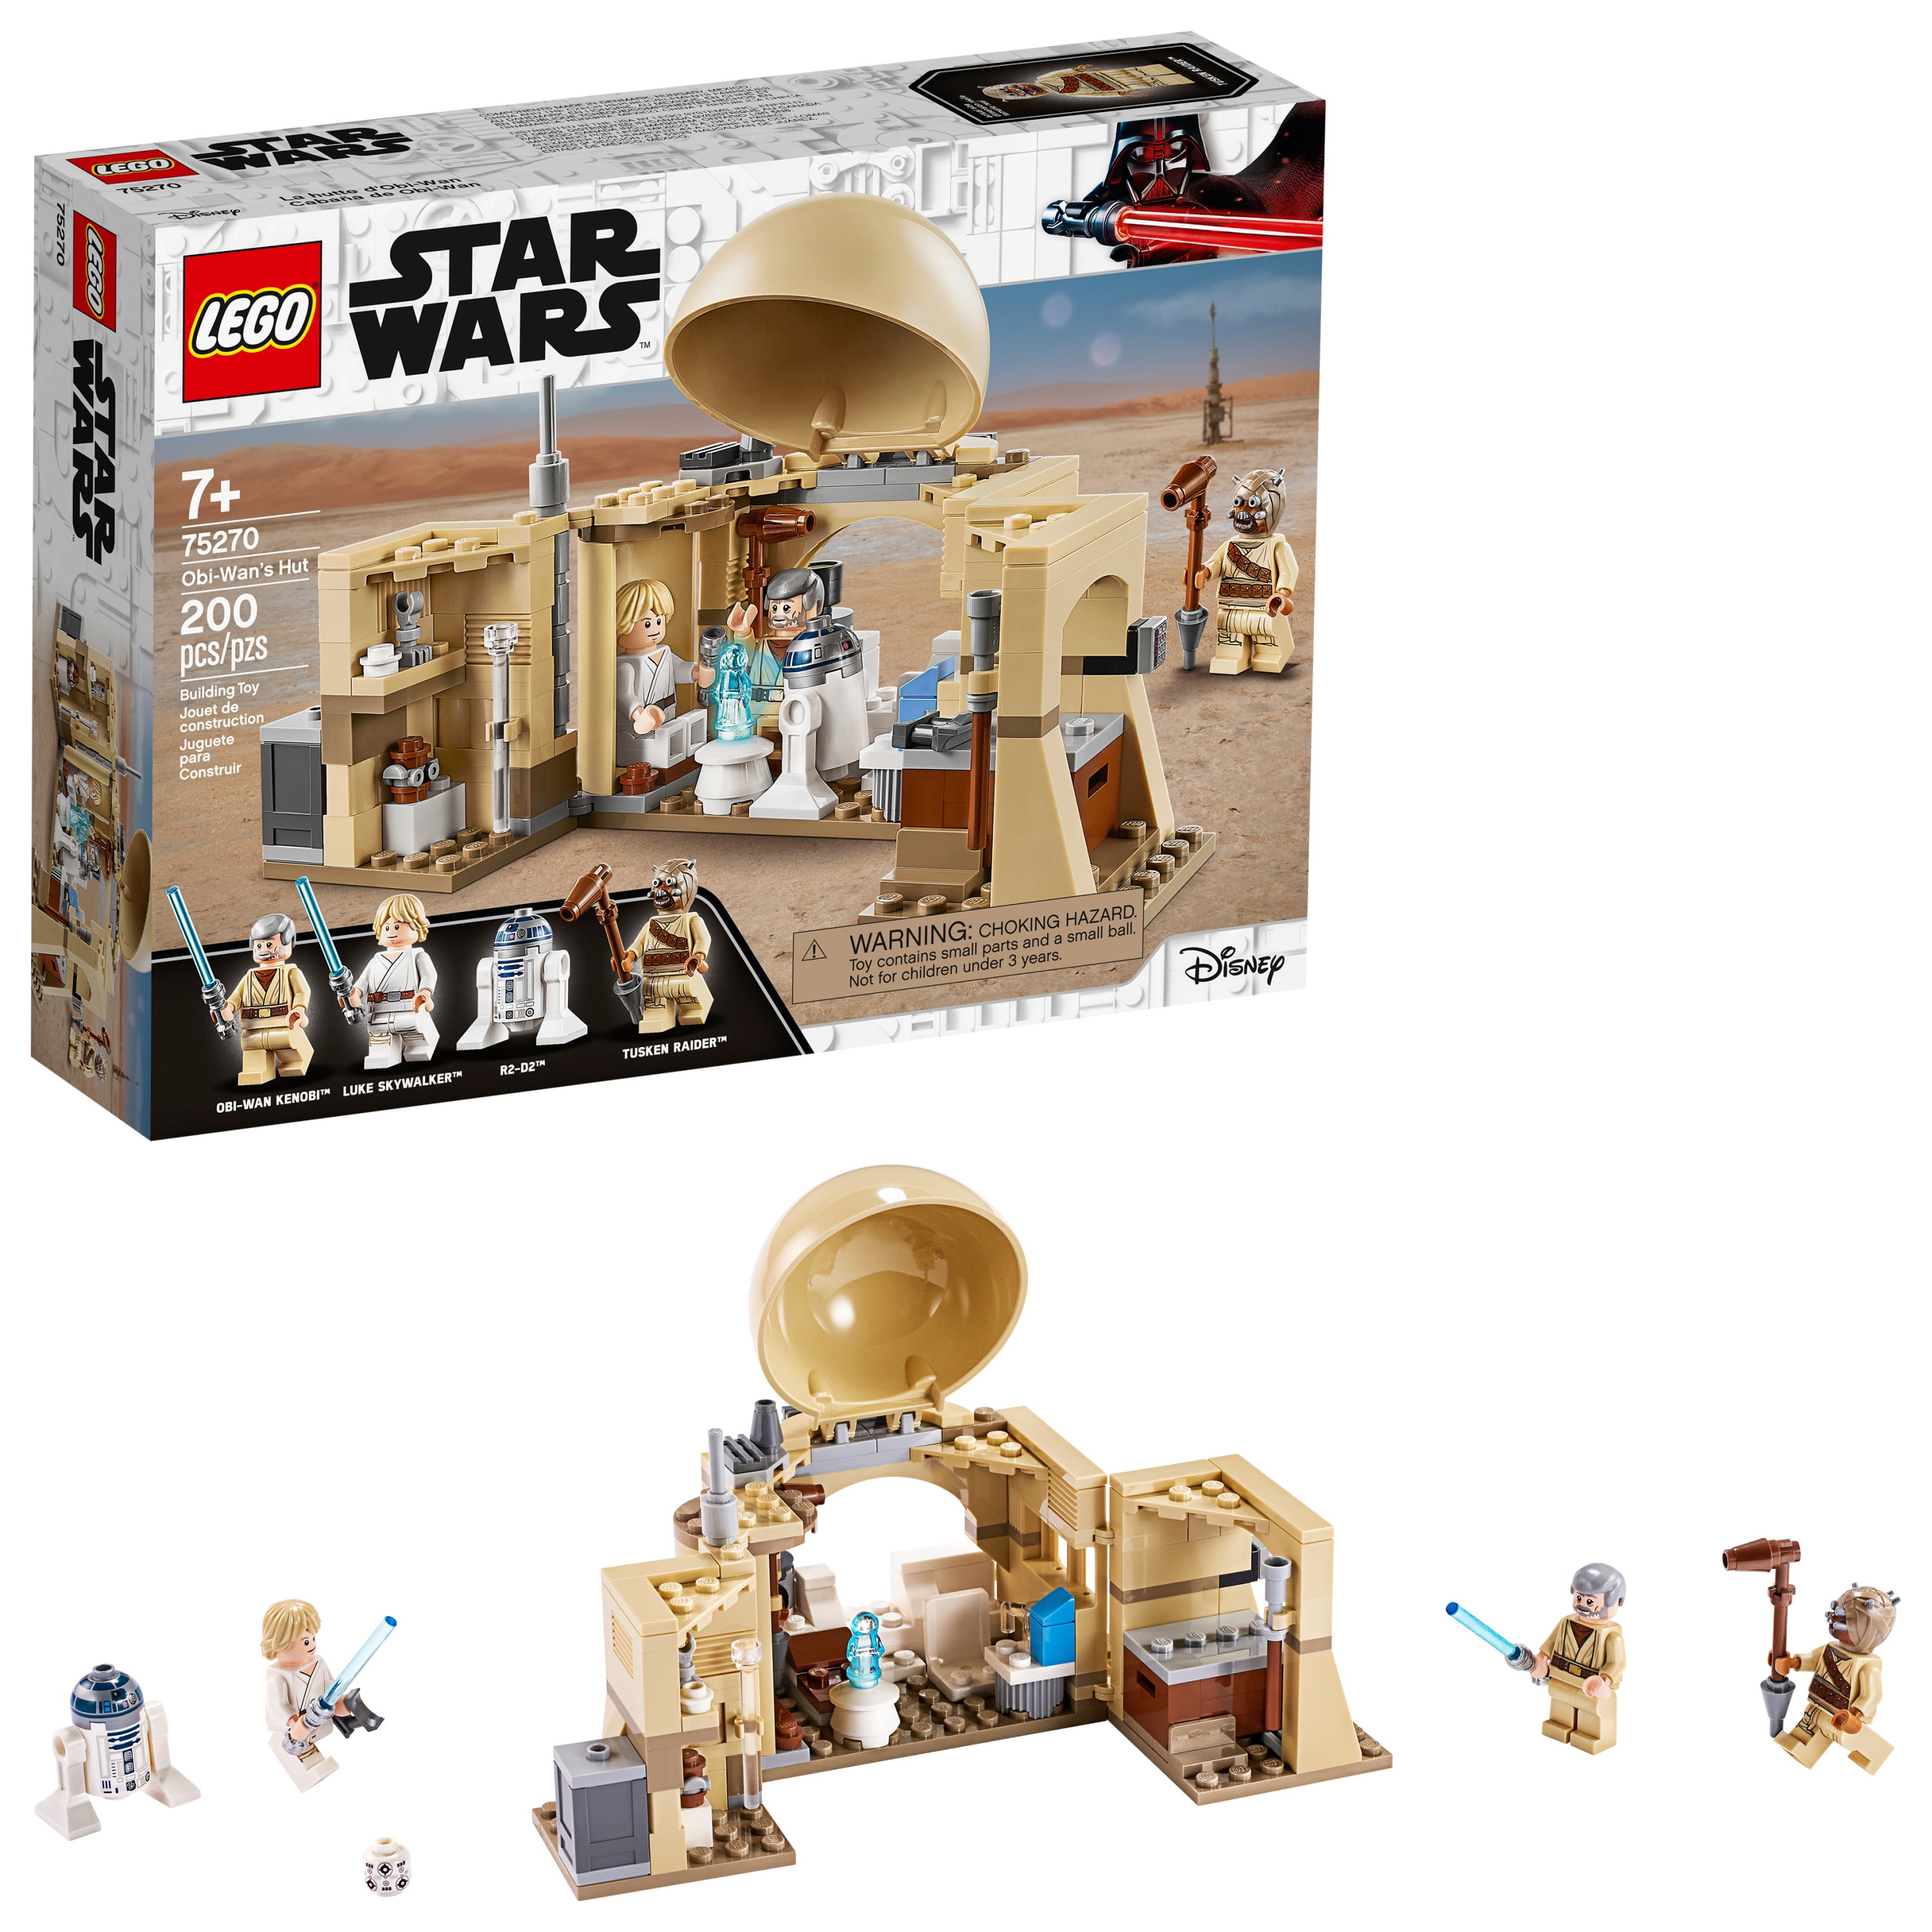 from set 75270 Star Wars NEW sw1084 Lego Obi-Wan Kenobi Minifigure Old 